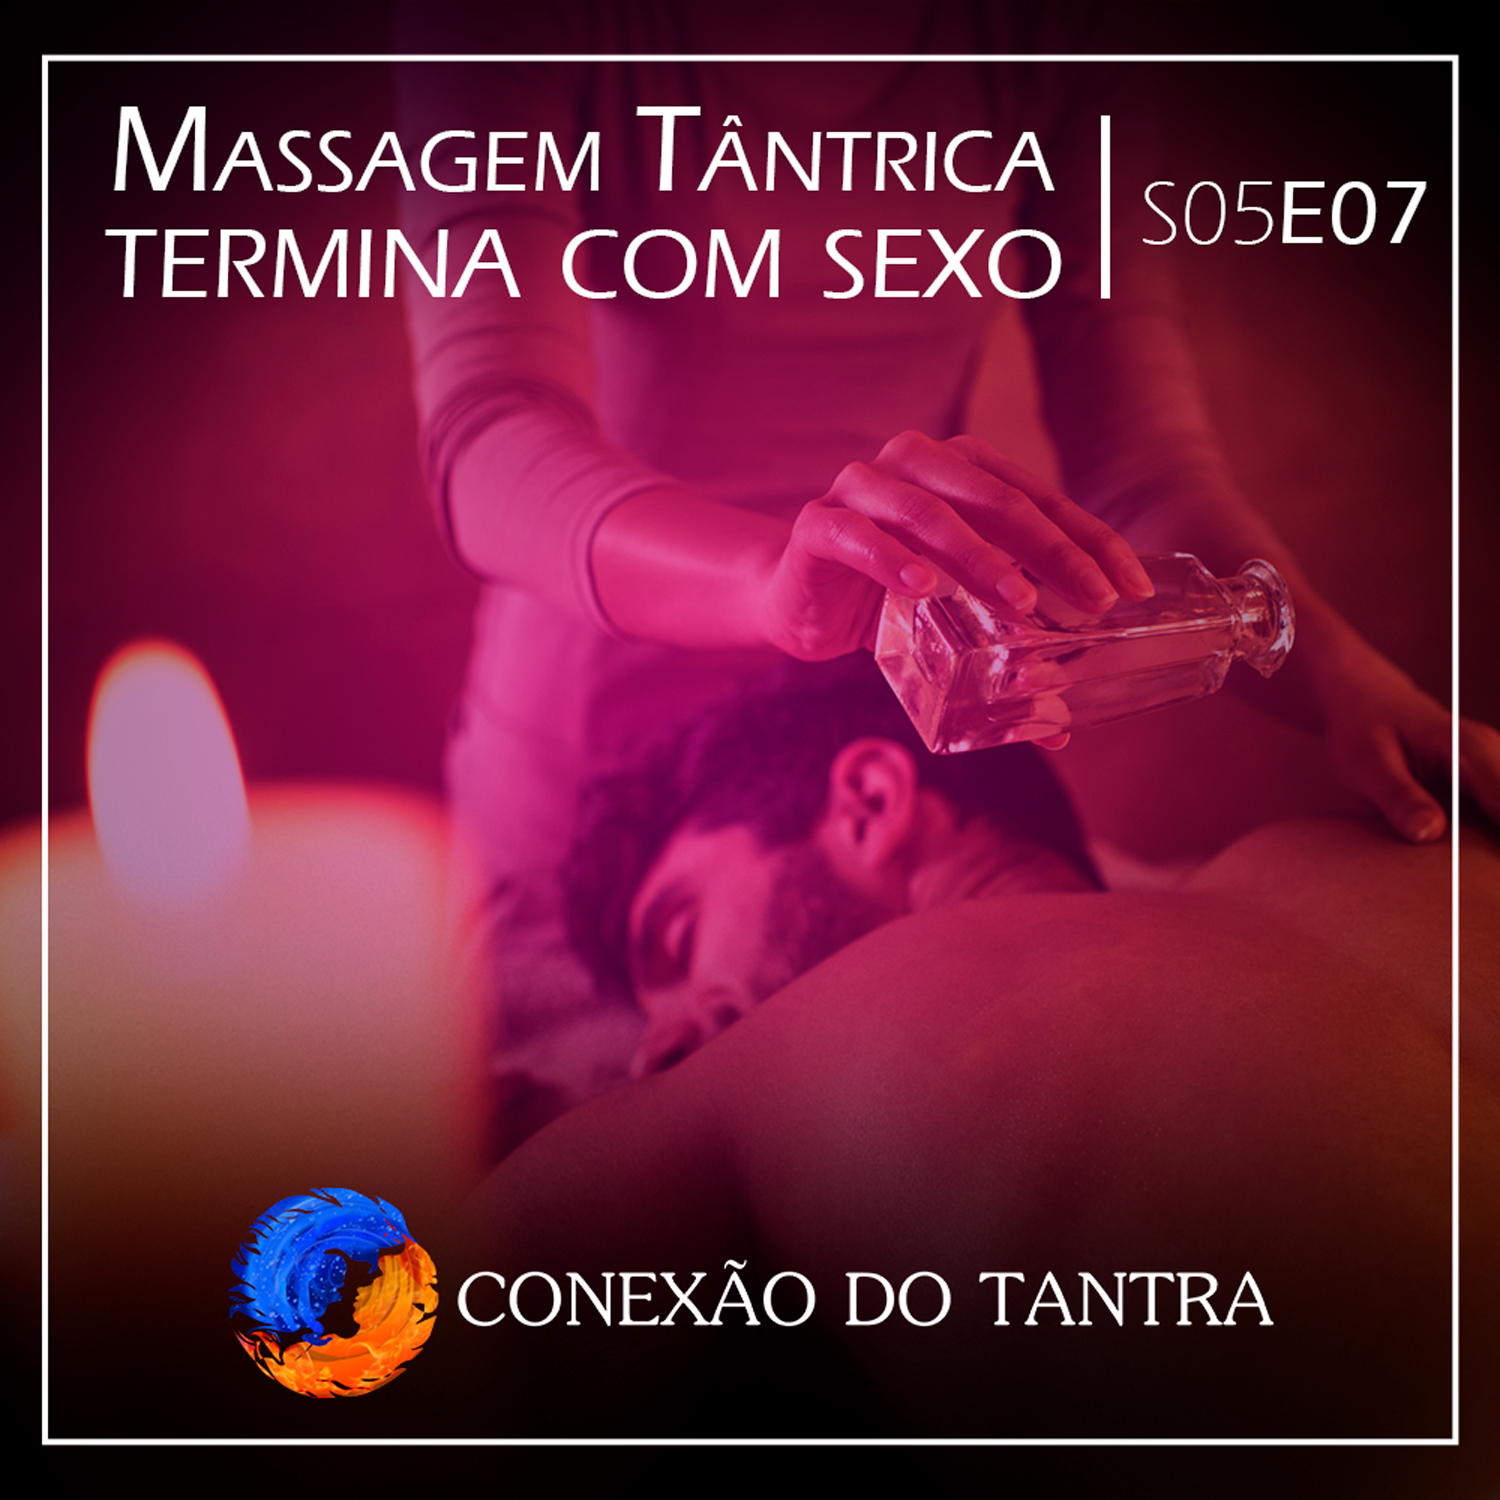 Massagem Tântrica Termina com Sexo post thumbnail image